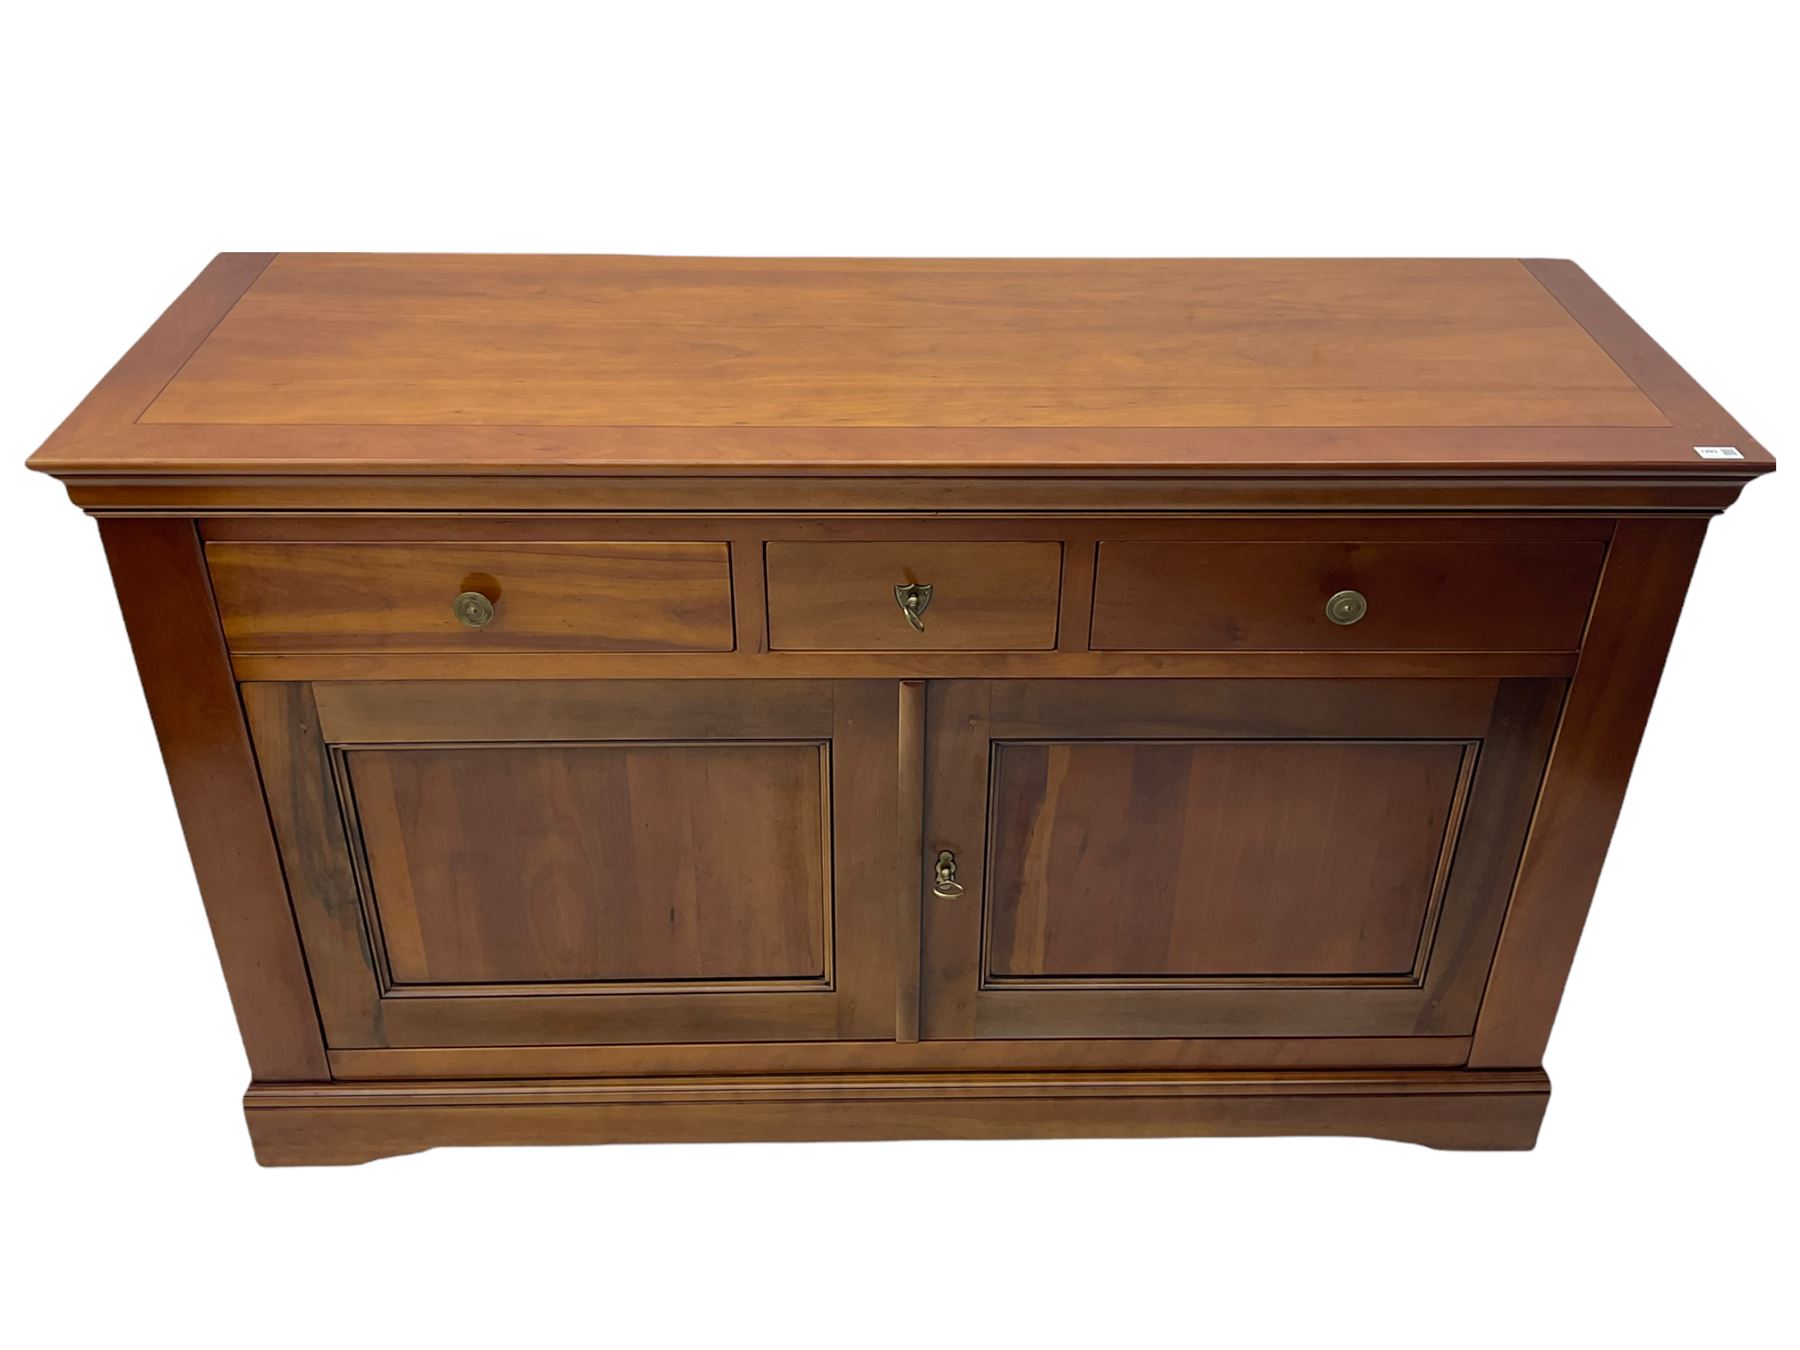 Grange Furniture cherry wood sideboard - Image 2 of 8